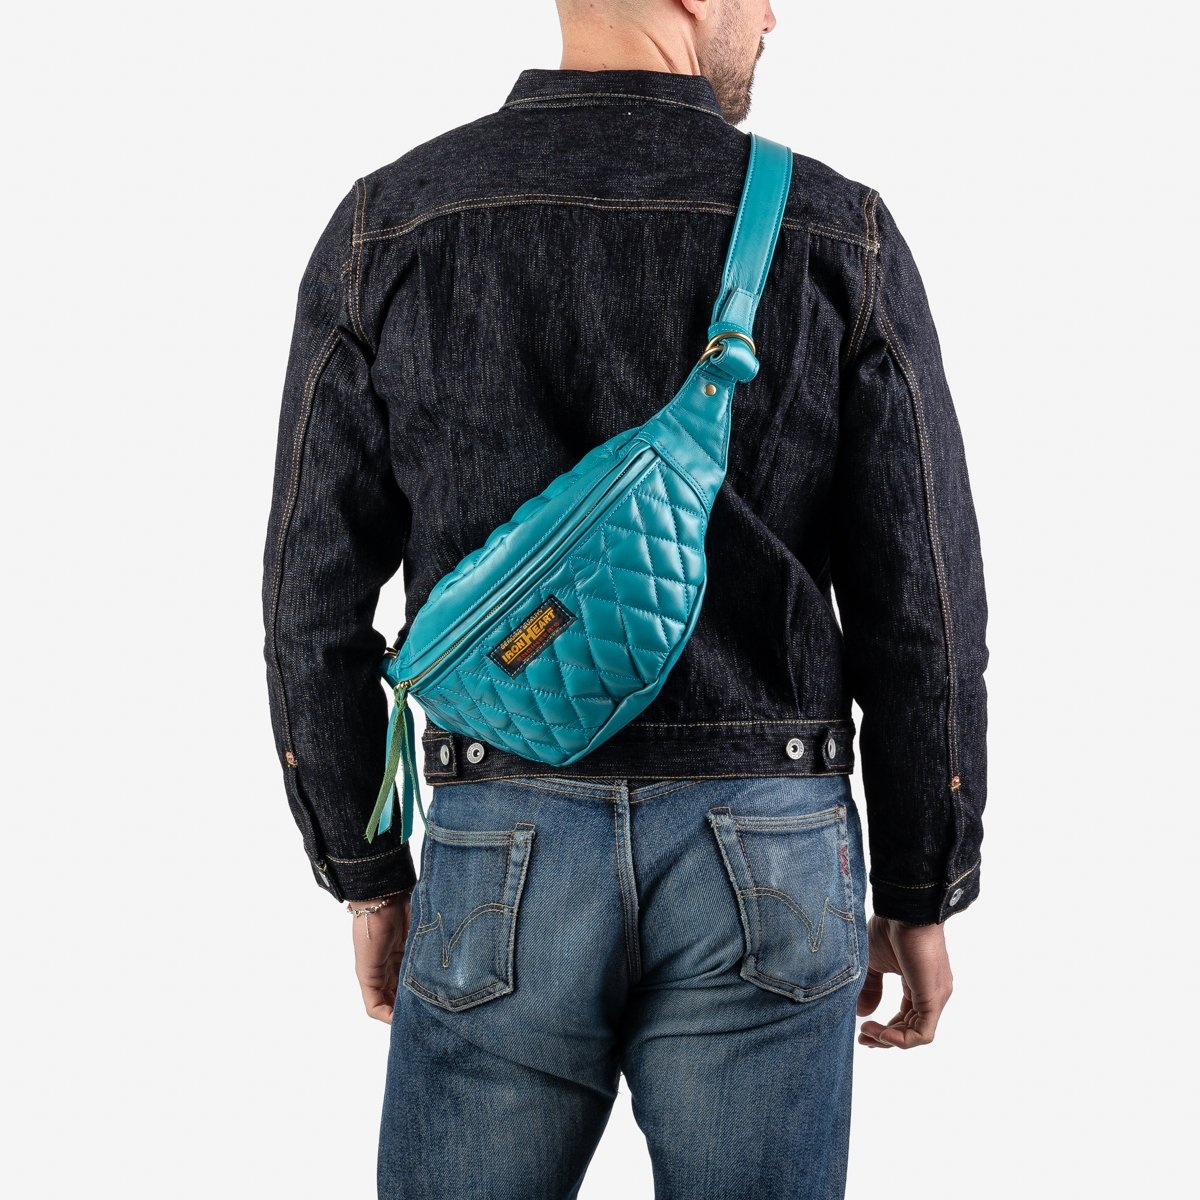 IHE-45-BLU Diamond Stitched Leather Waist Bag - Blue - 3